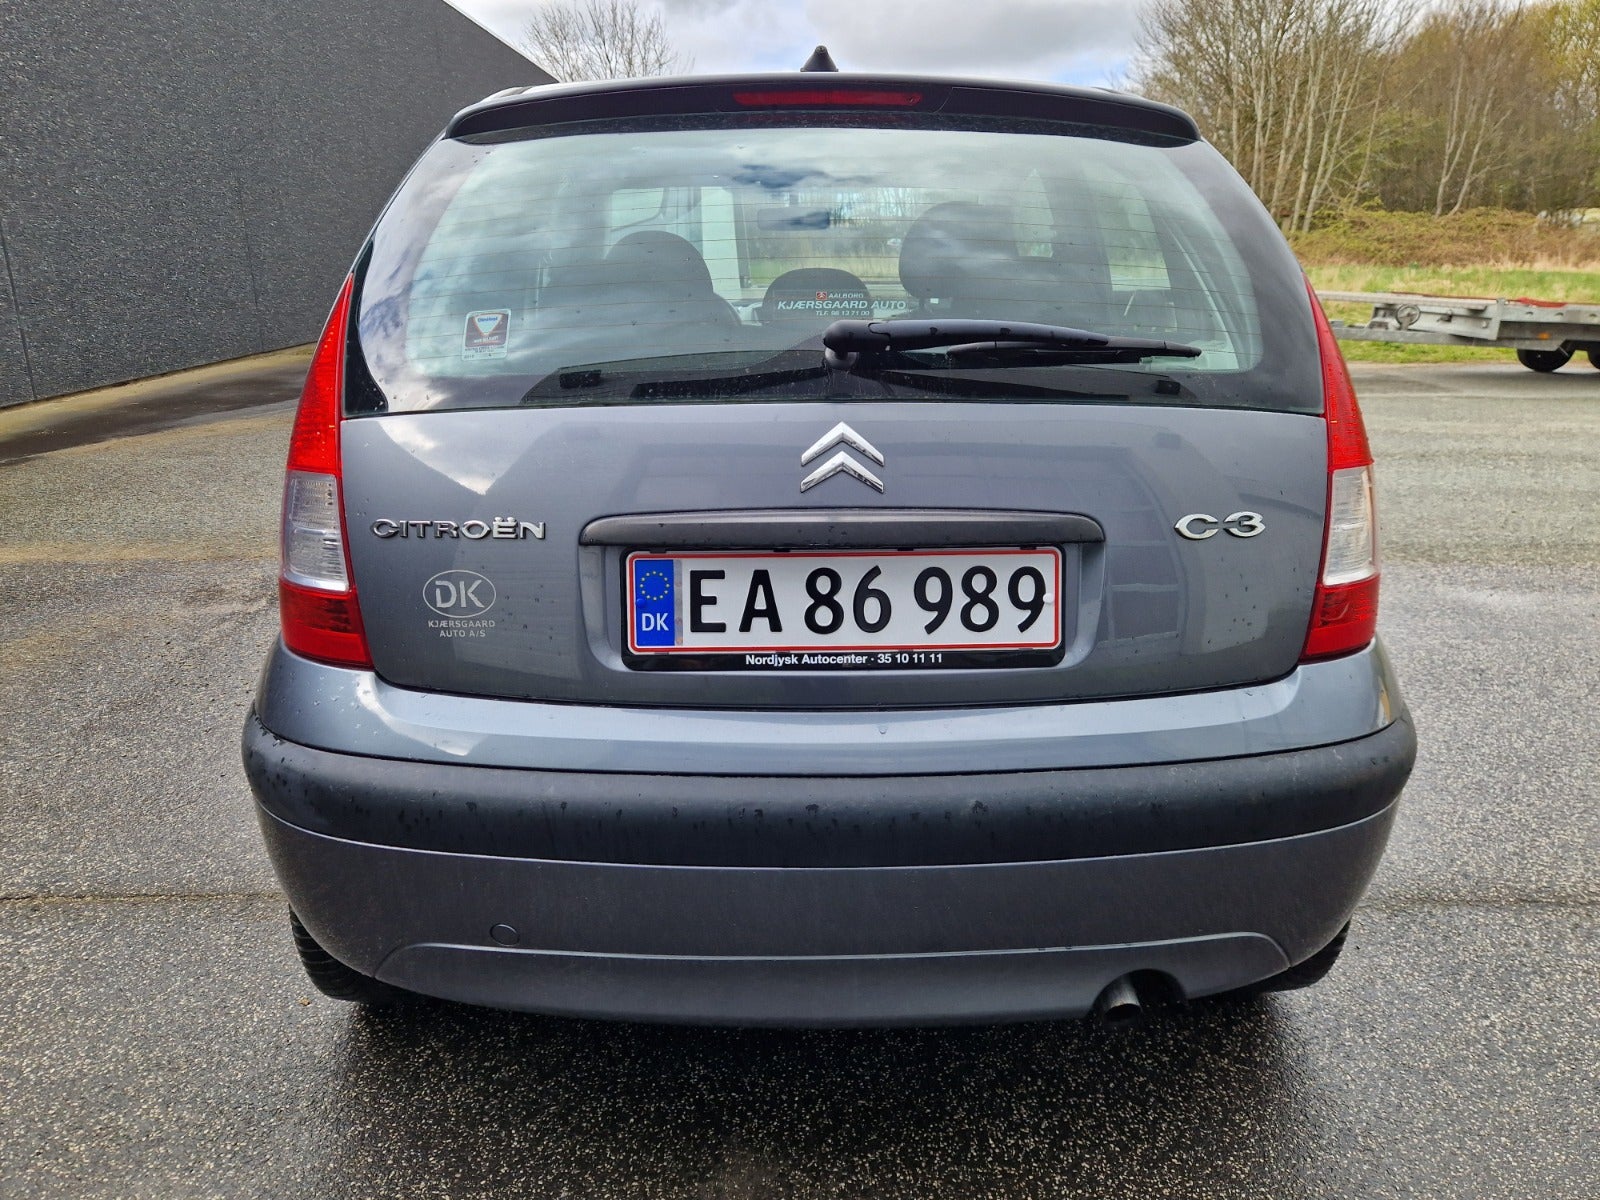 Citroën C3 1,4 HDi Family Diesel modelår 2009 km 156000